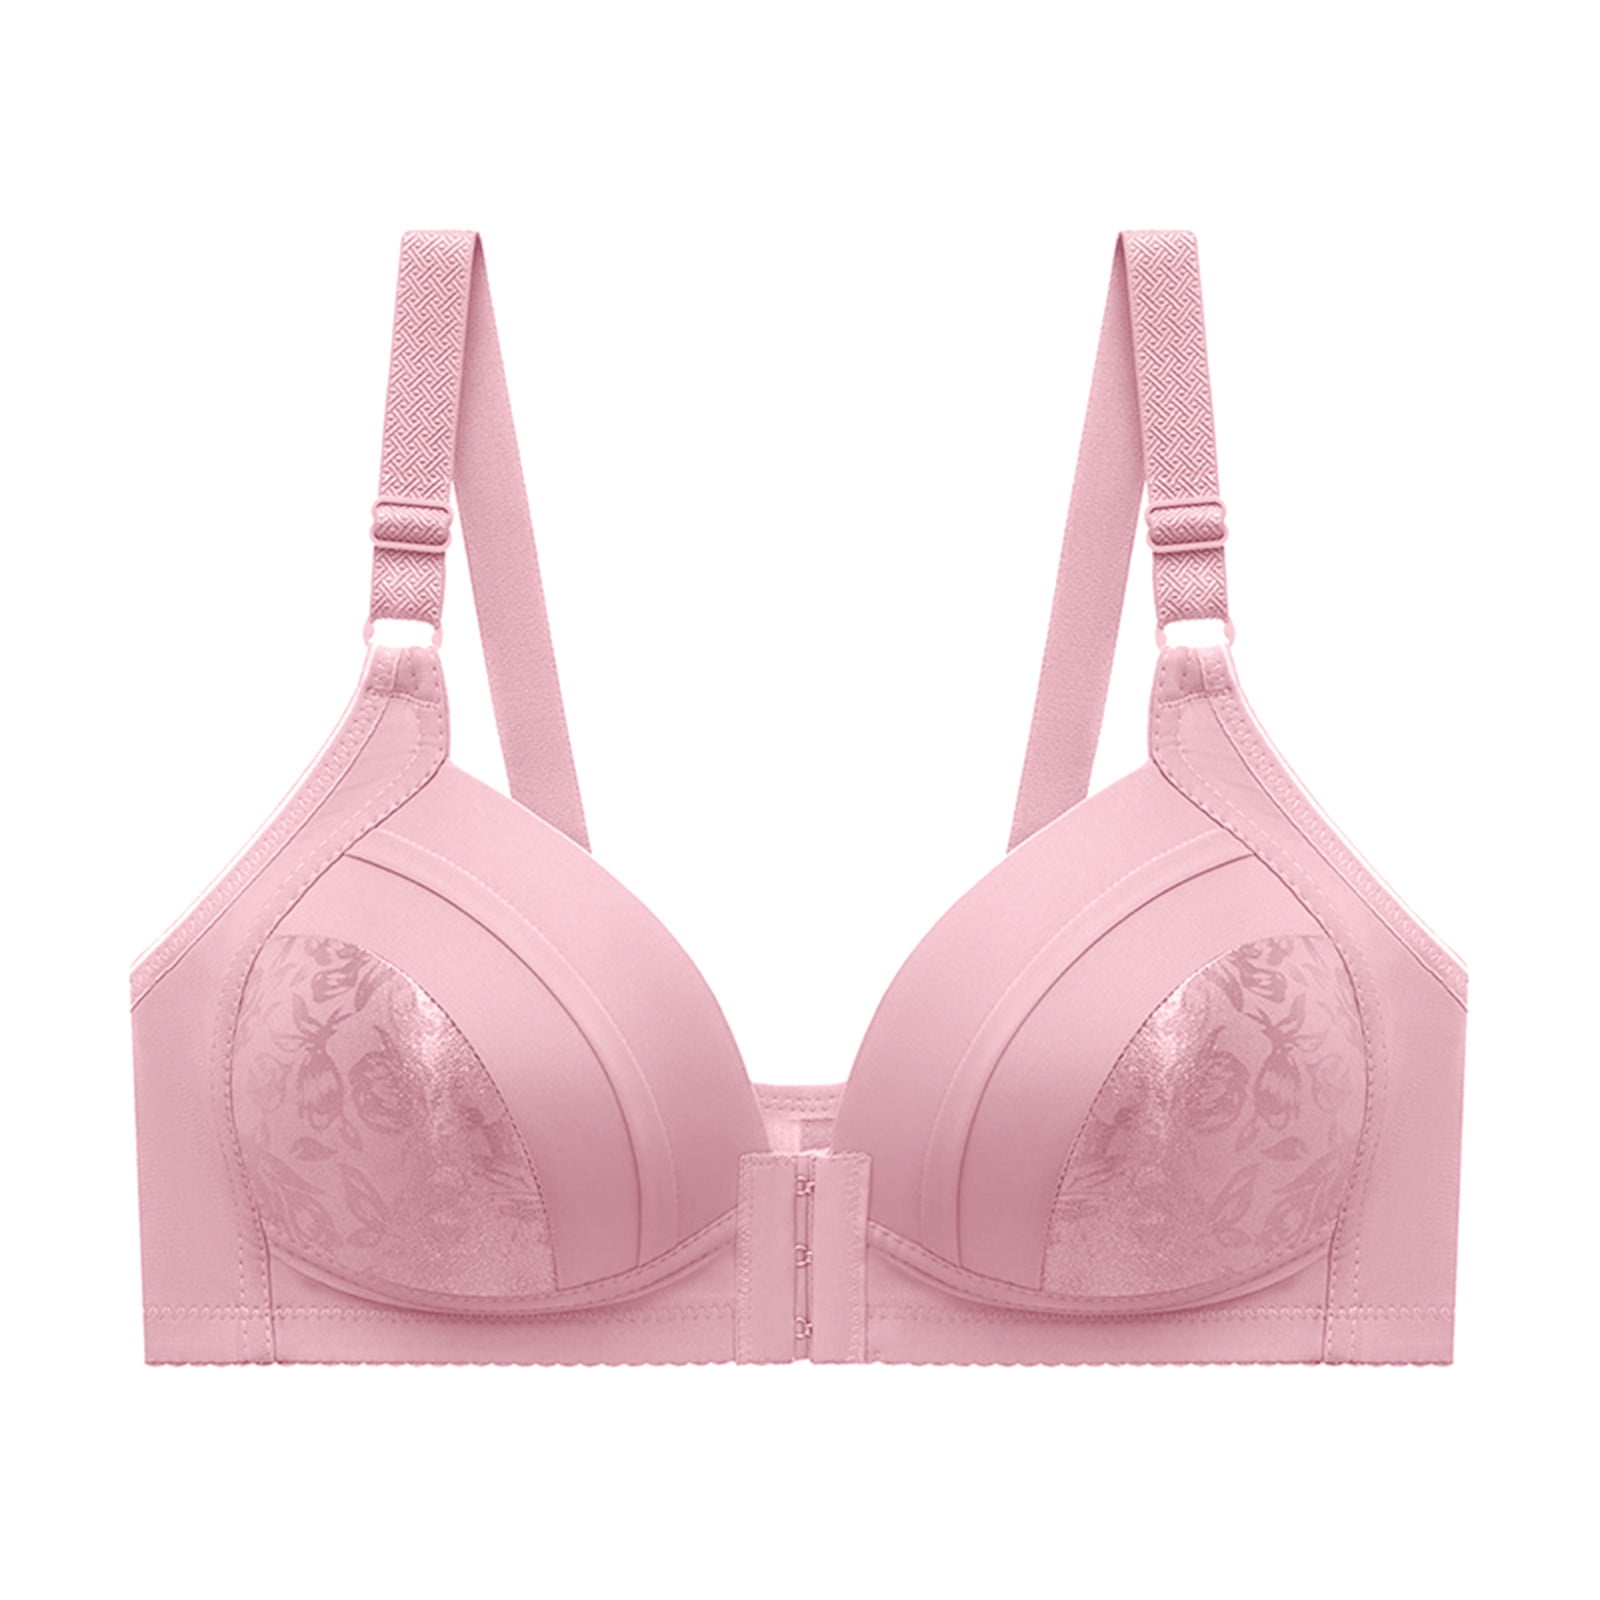 Buy Kisme Women Bra Non-Padded Bra Cotton Bra for Everyday use (34, Pink)  at